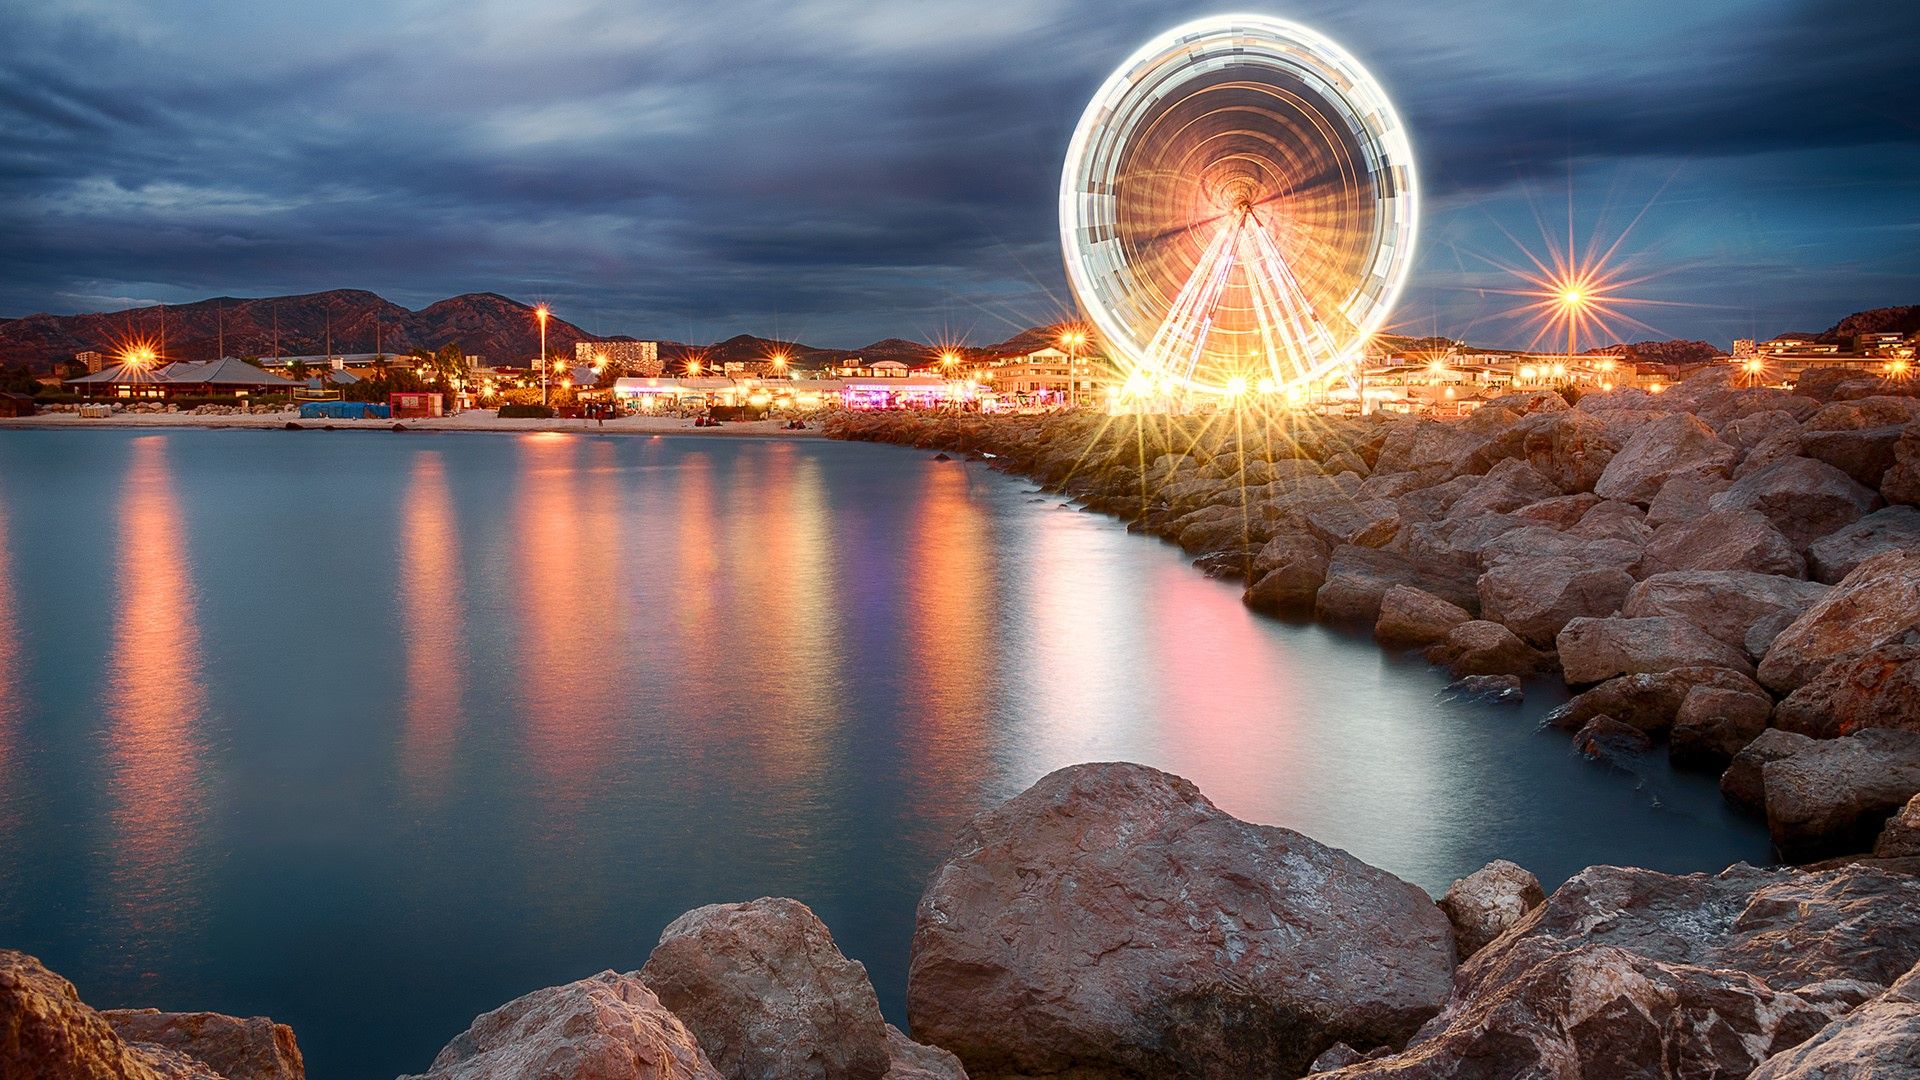 Ferris wheel in Old Port, summer evening in Marseille, France. Windows 10 Spotlight Image